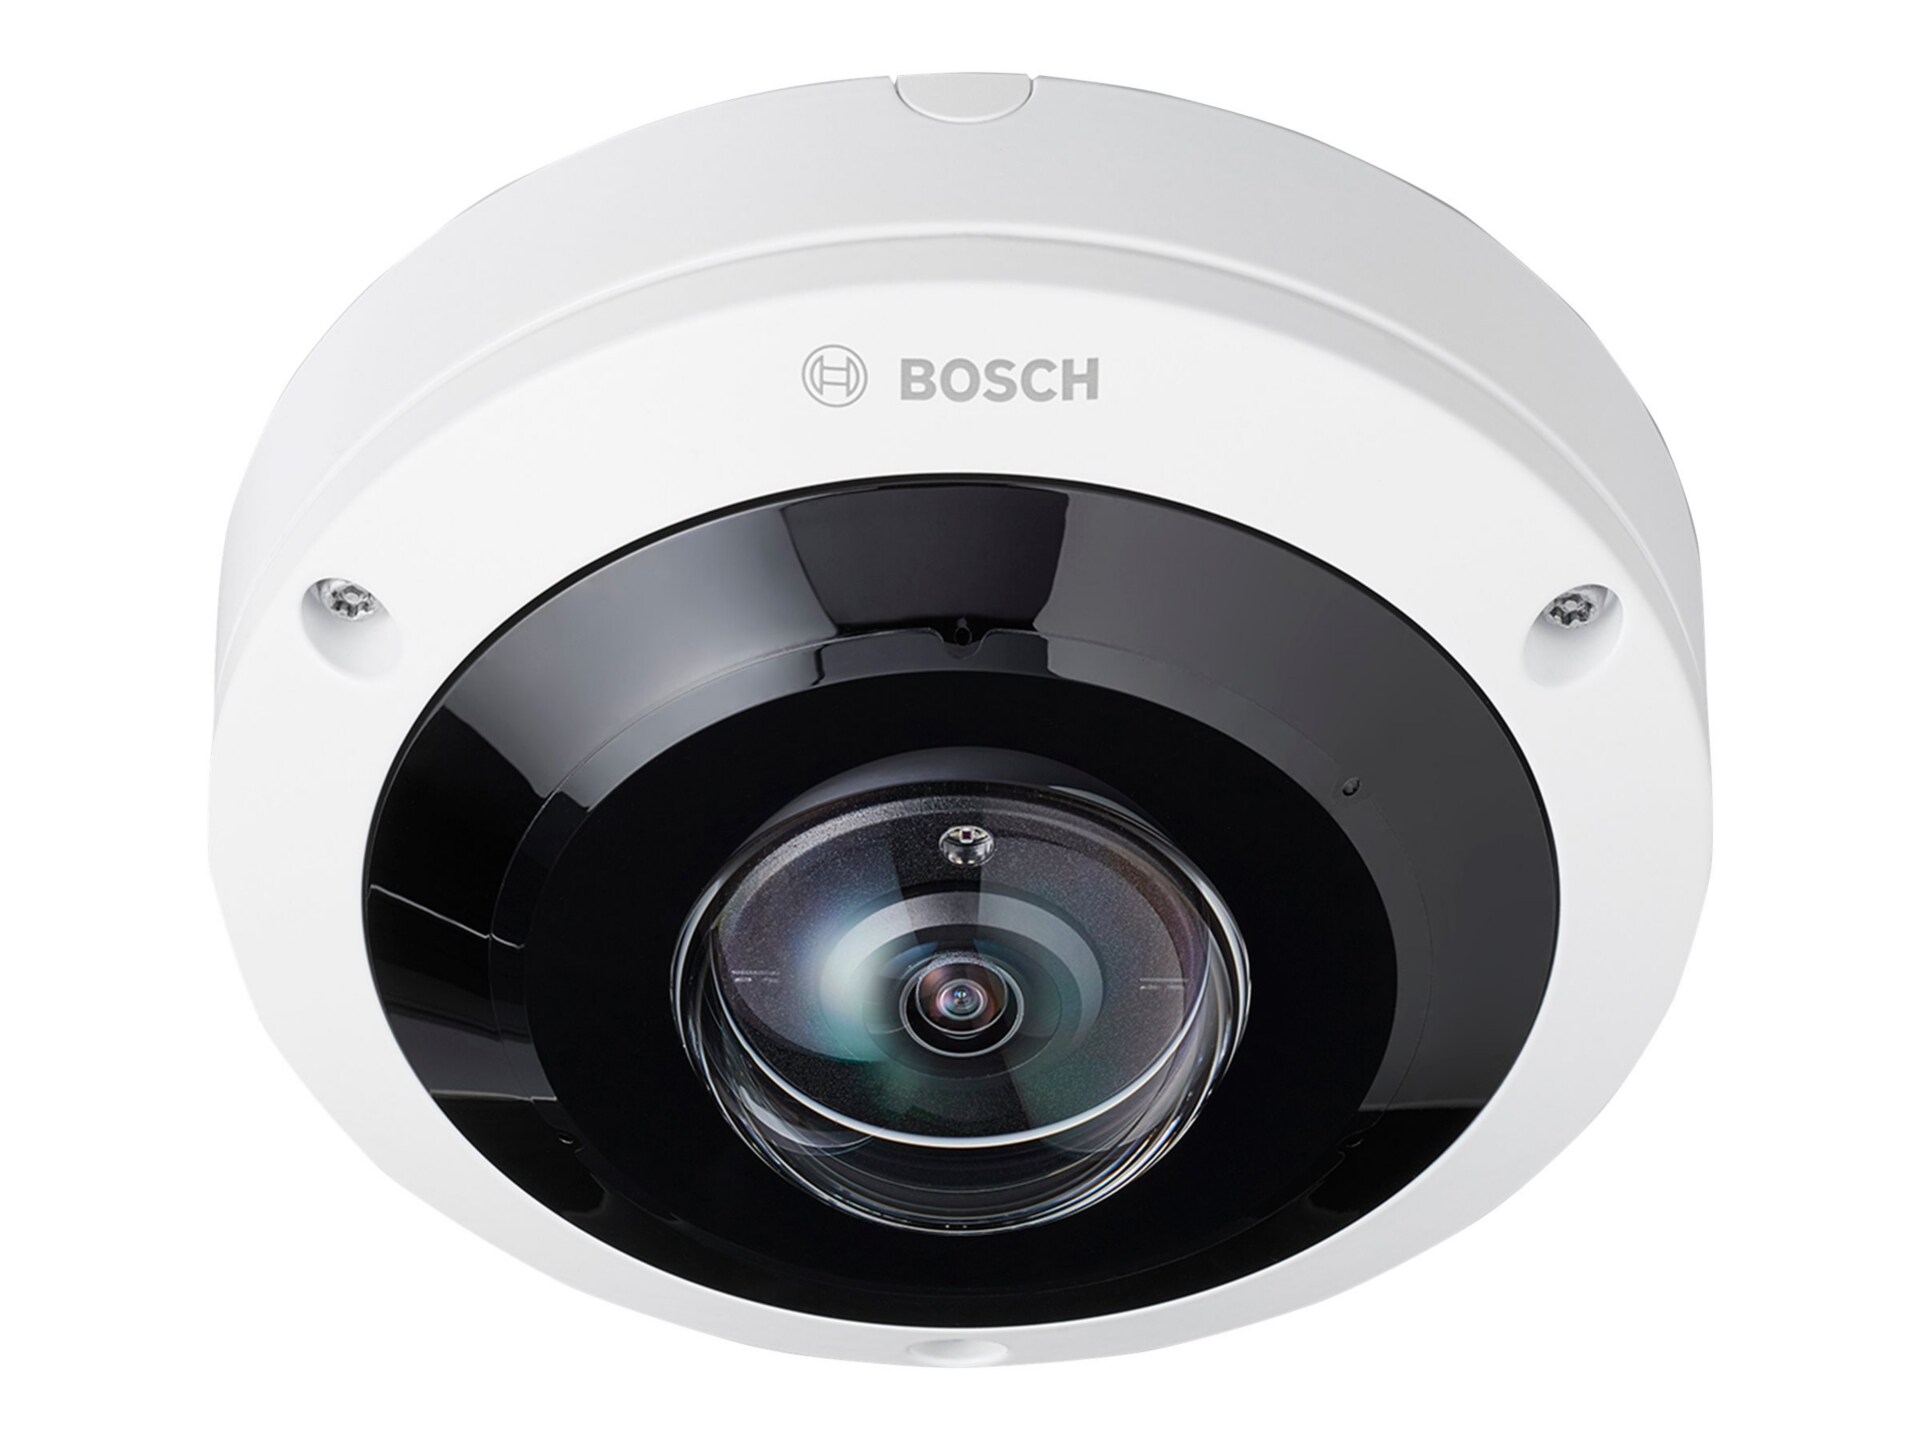 Bosch FLEXIDOME panoramic 5100i IR NDS-5704-F360LE - surveillance réseau/caméra panoramique - dôme